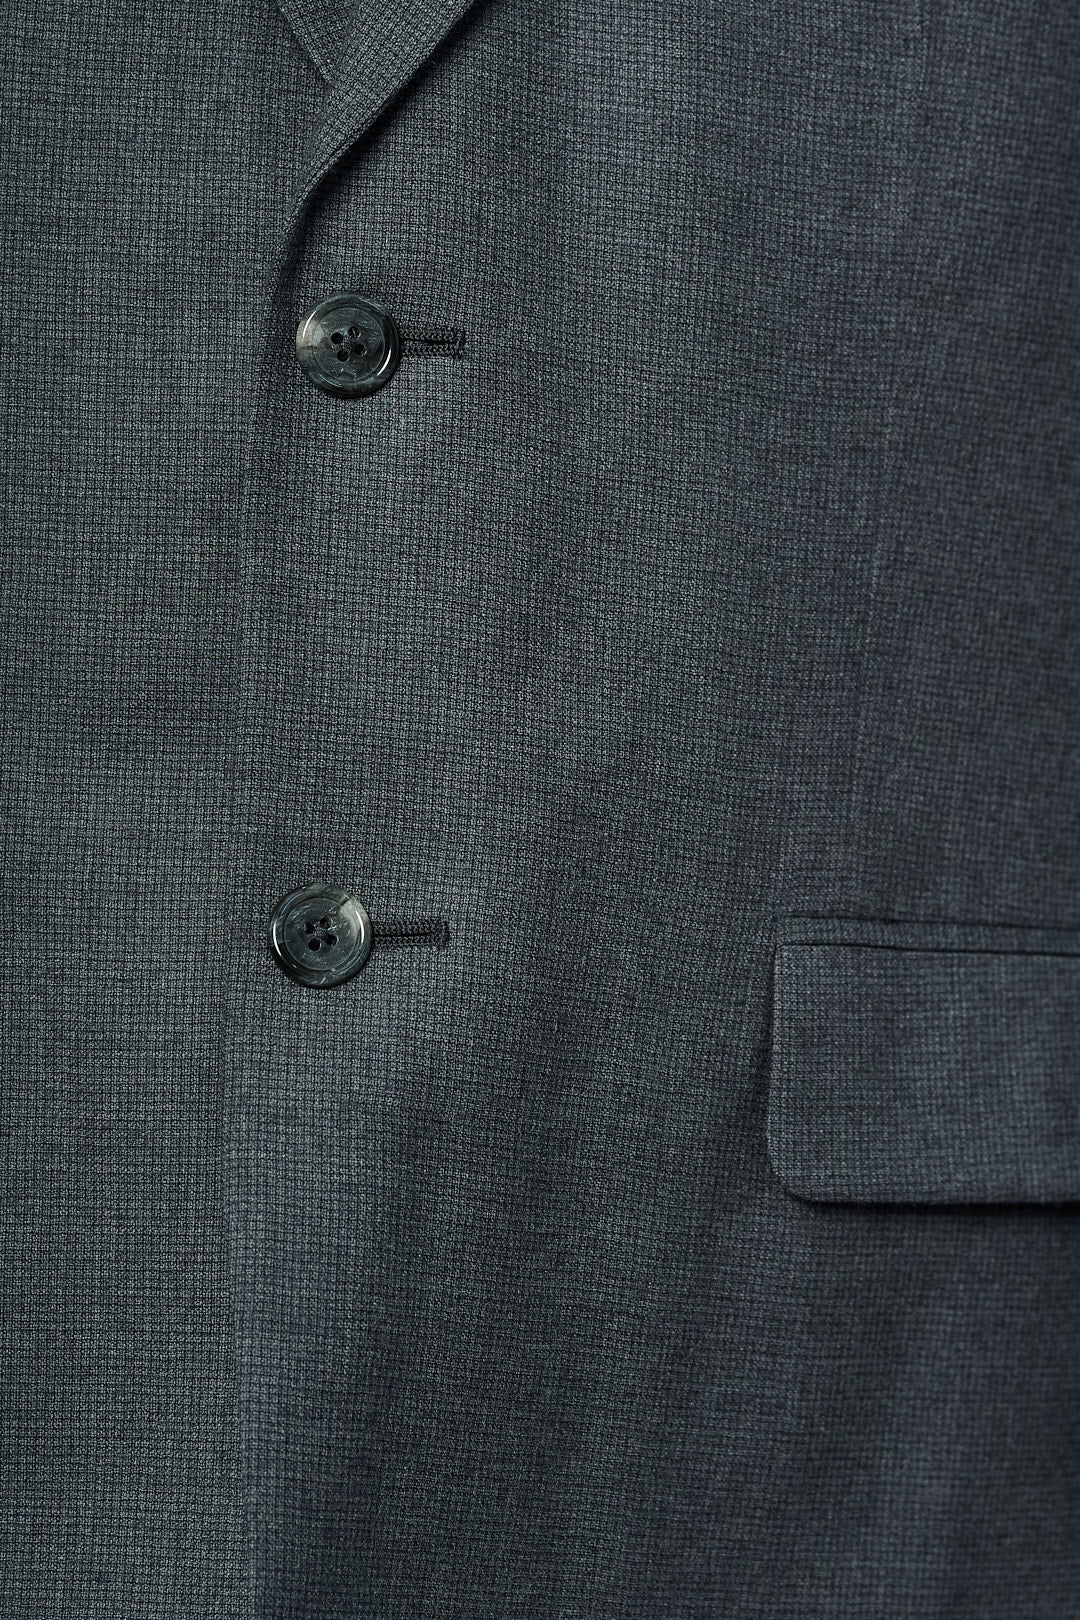 Gray Textured Suit